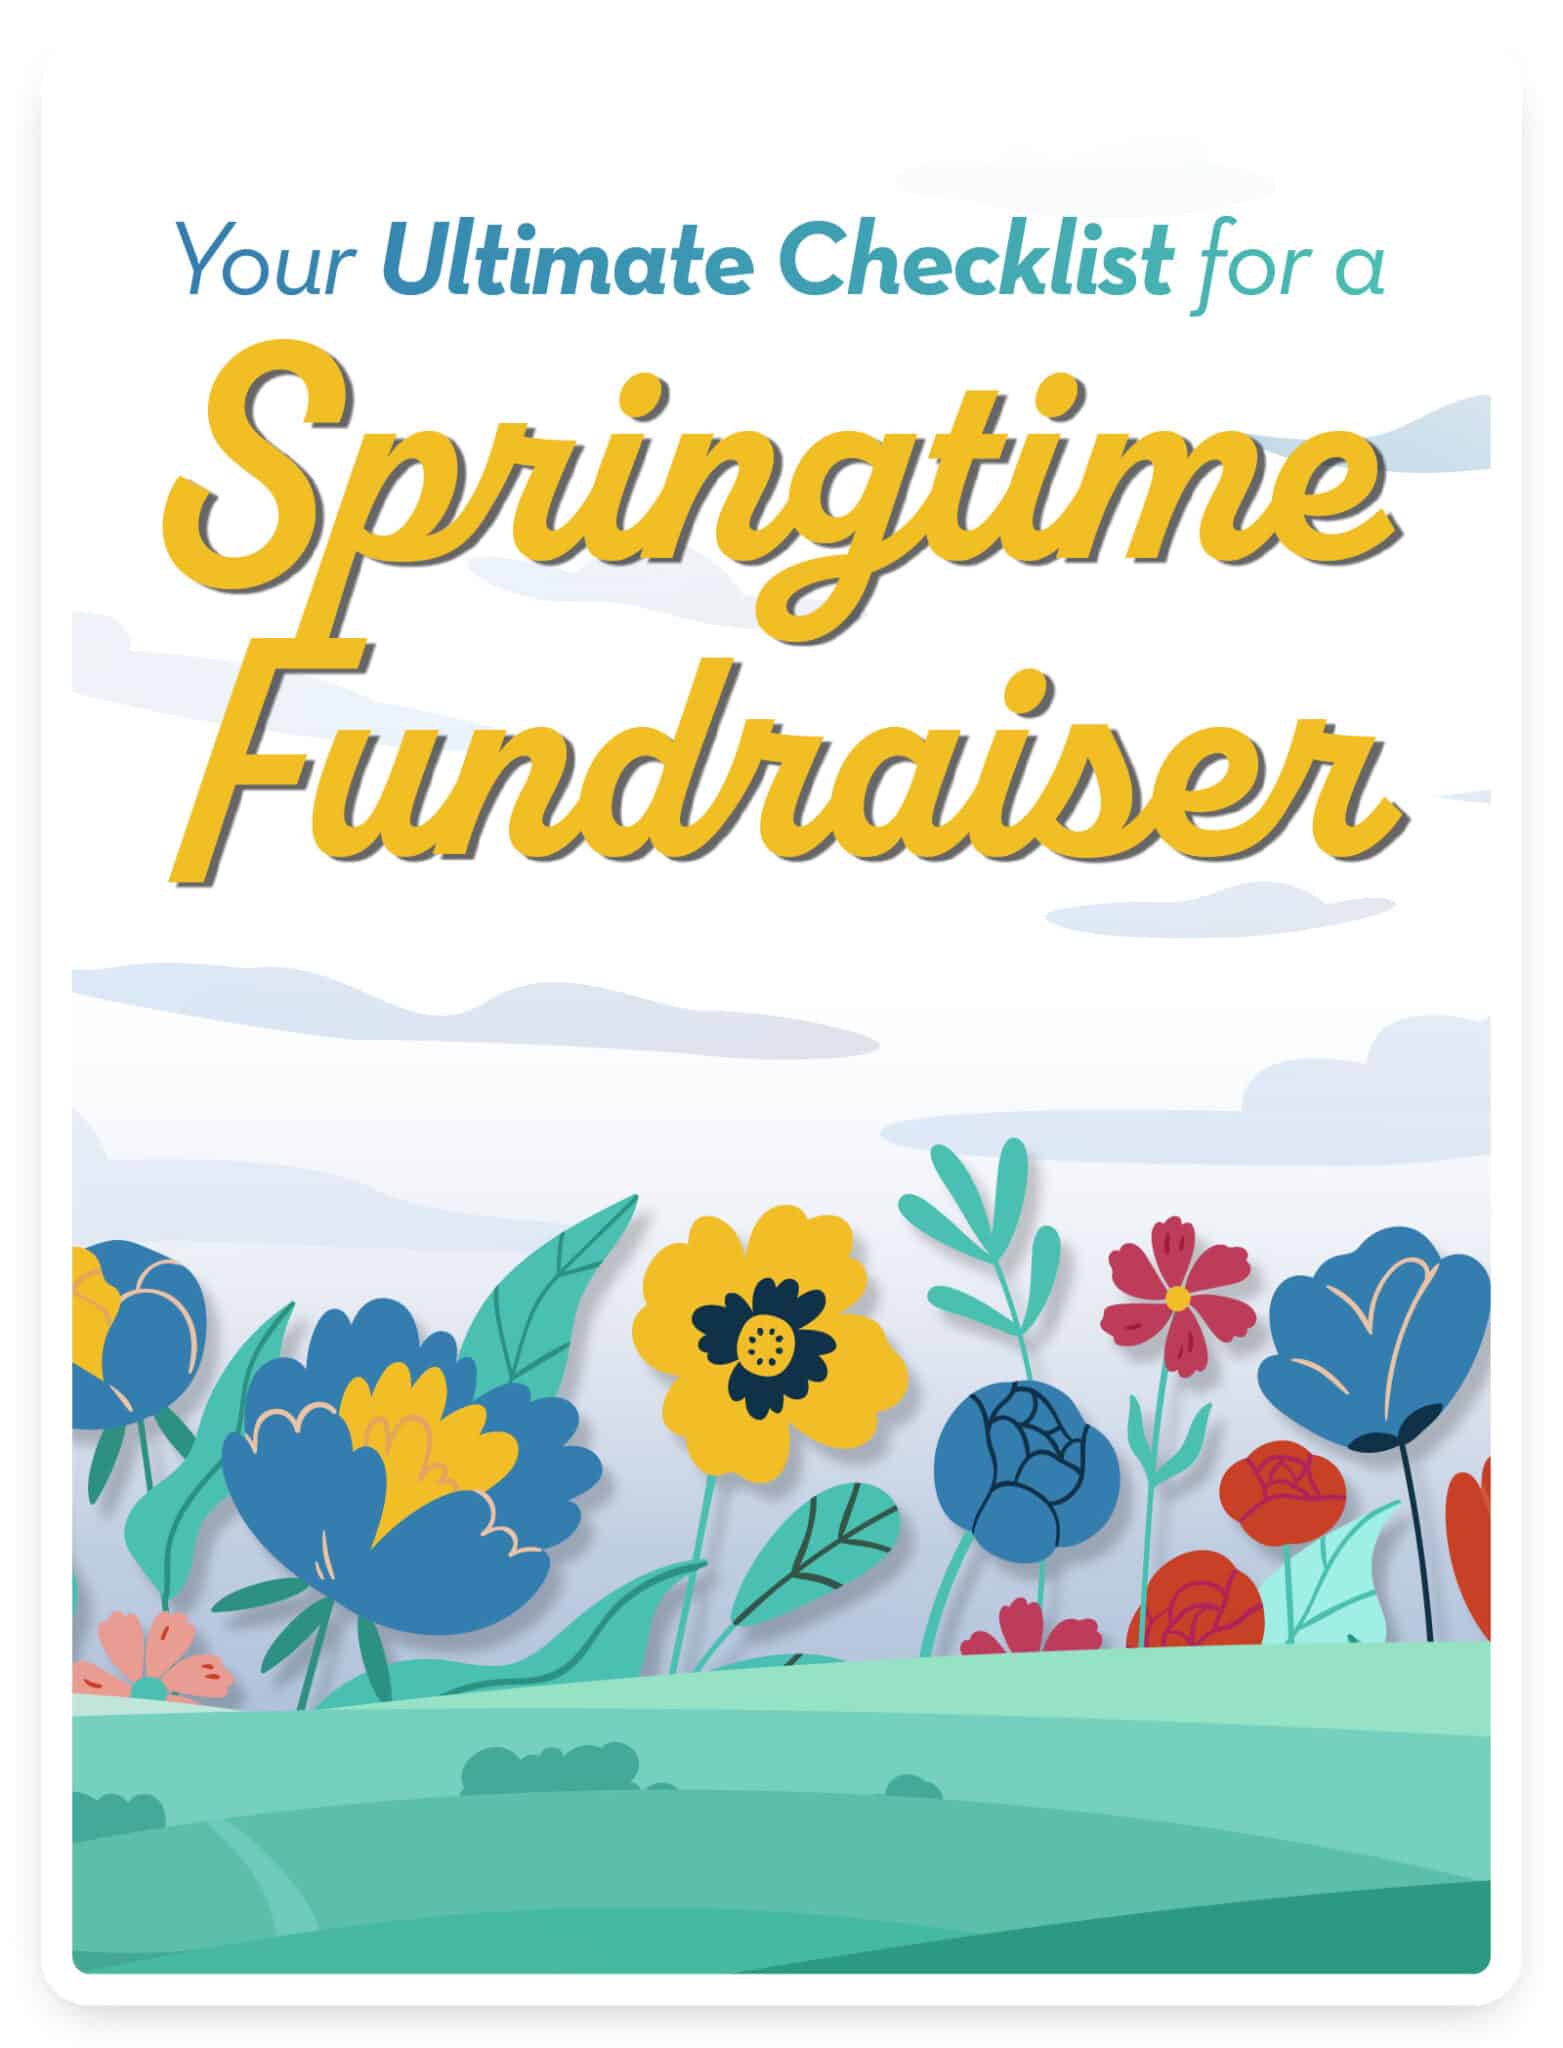 Springtime Fundraiser Checklist